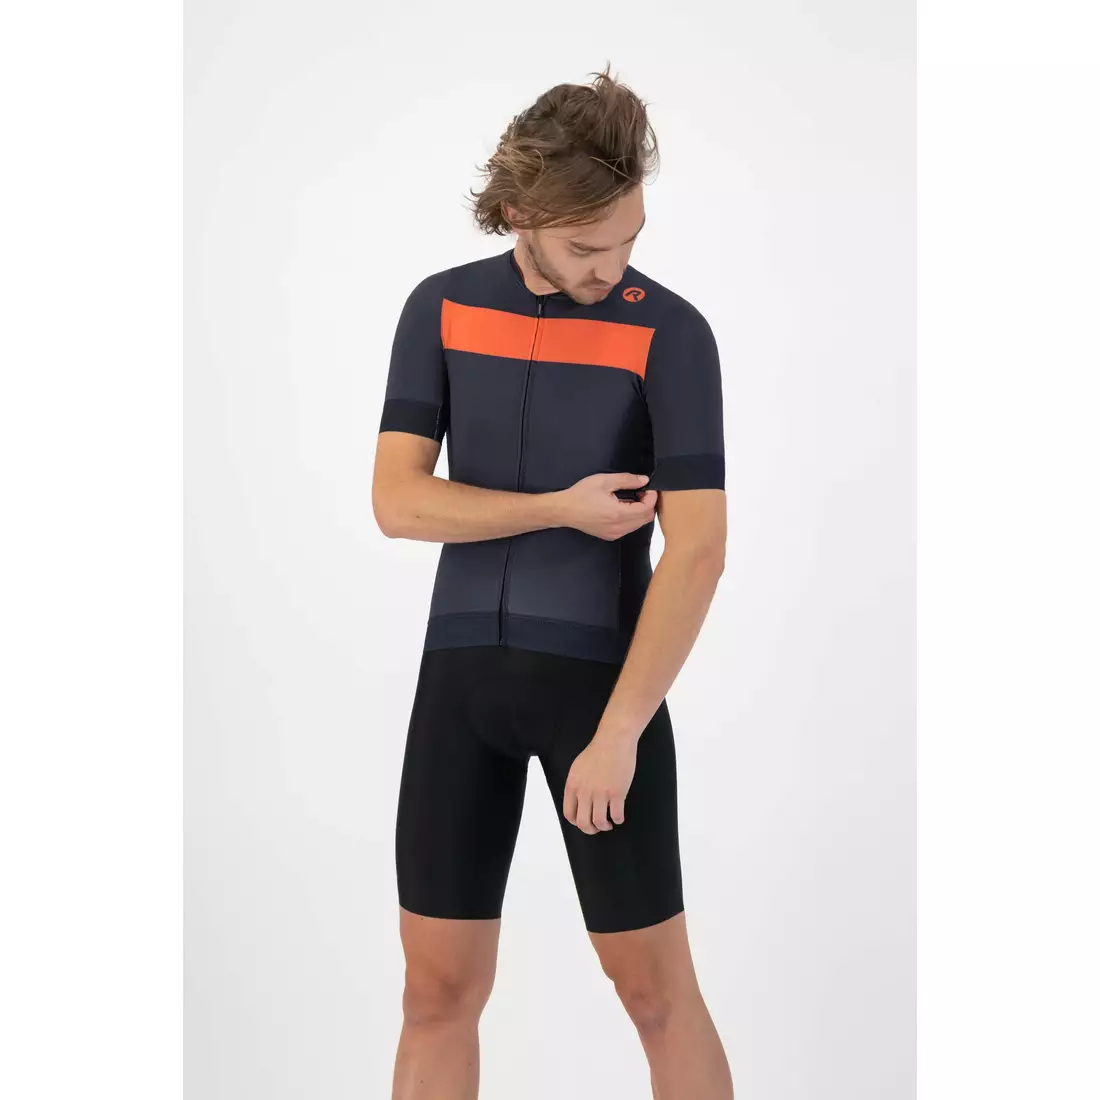 ROGELLI PRIME men's cycling jersey blue orange